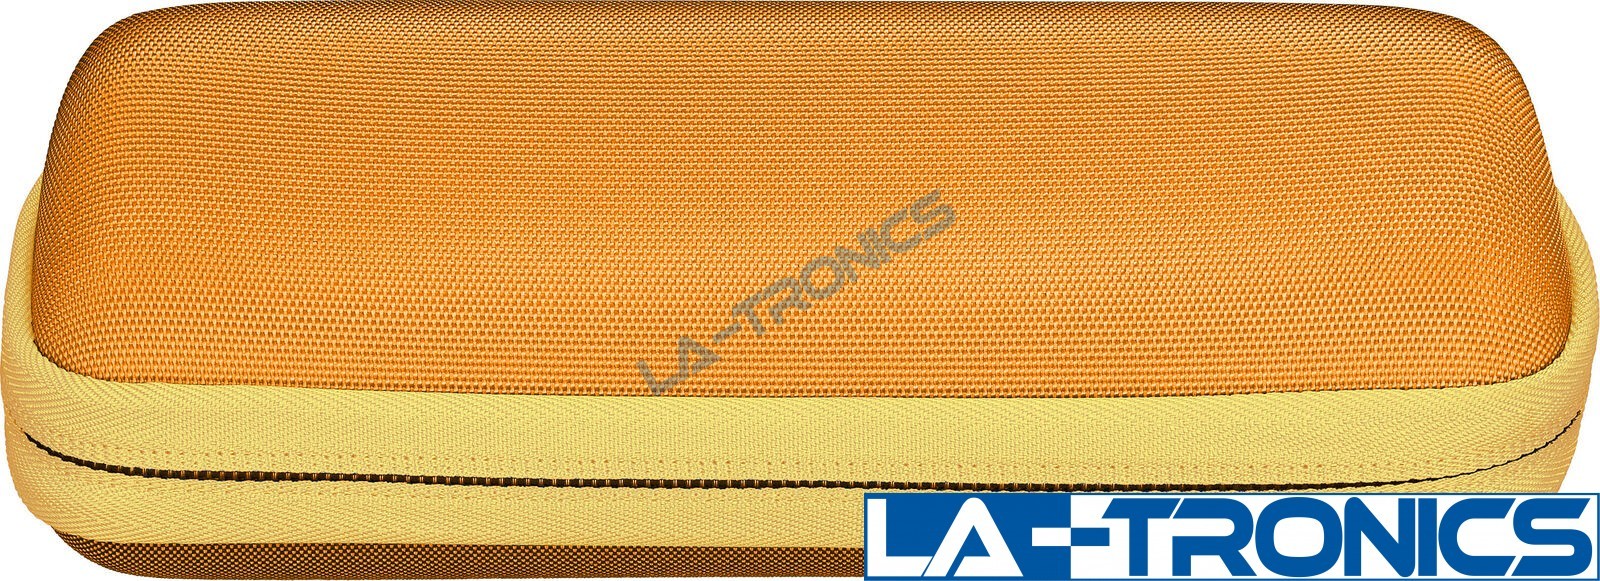 Insignia Carrying Case For Sonos Roam Portable Speaker - Orange